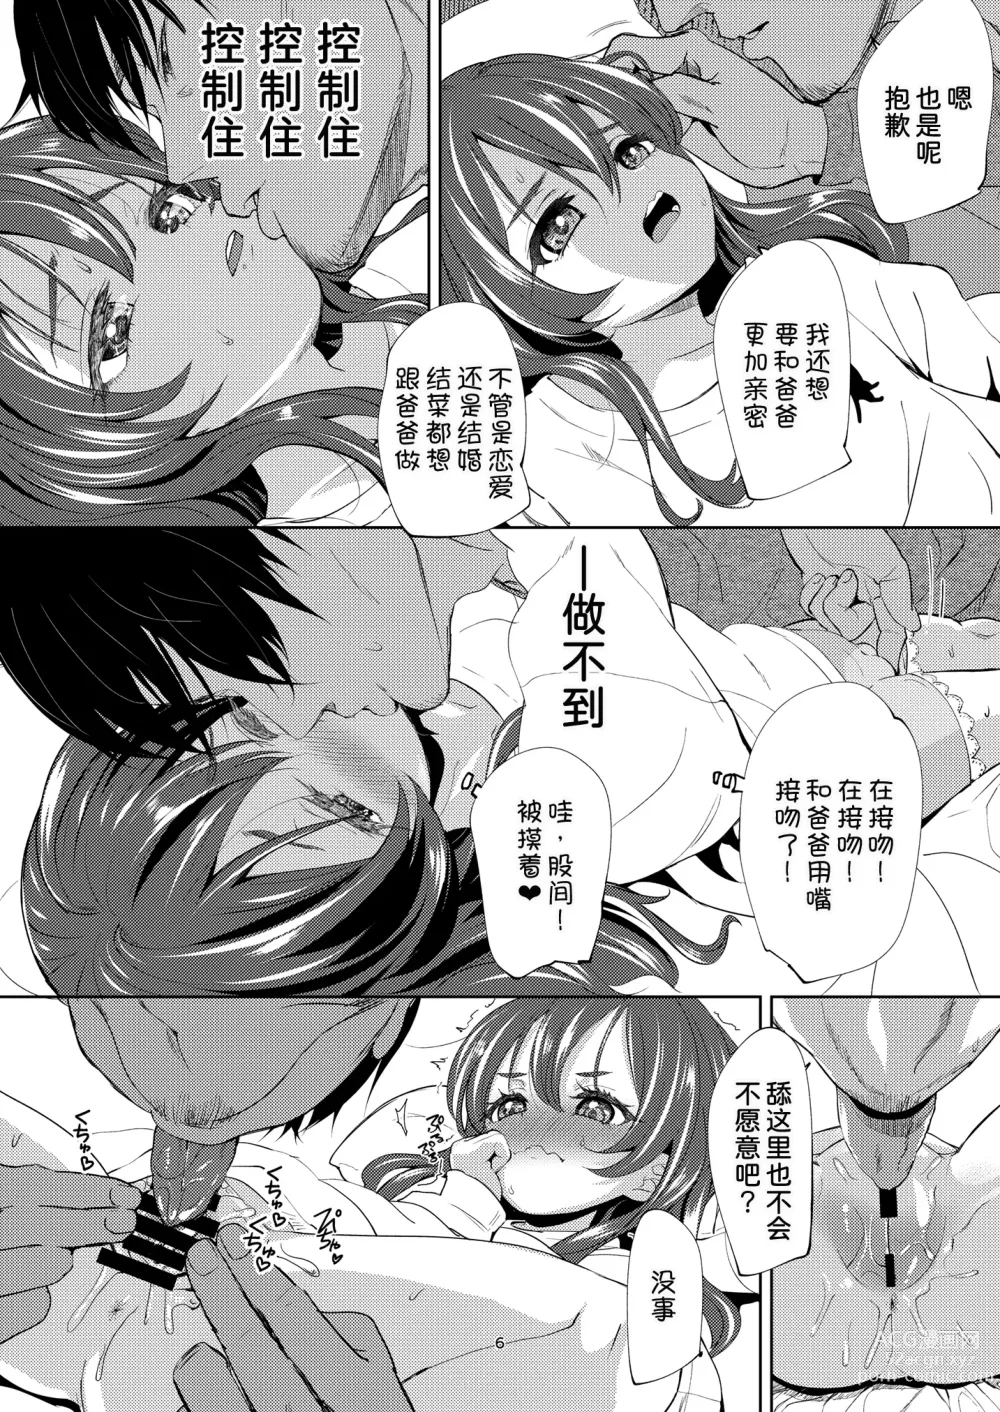 Page 7 of doujinshi Chichi + Musume + Sex =